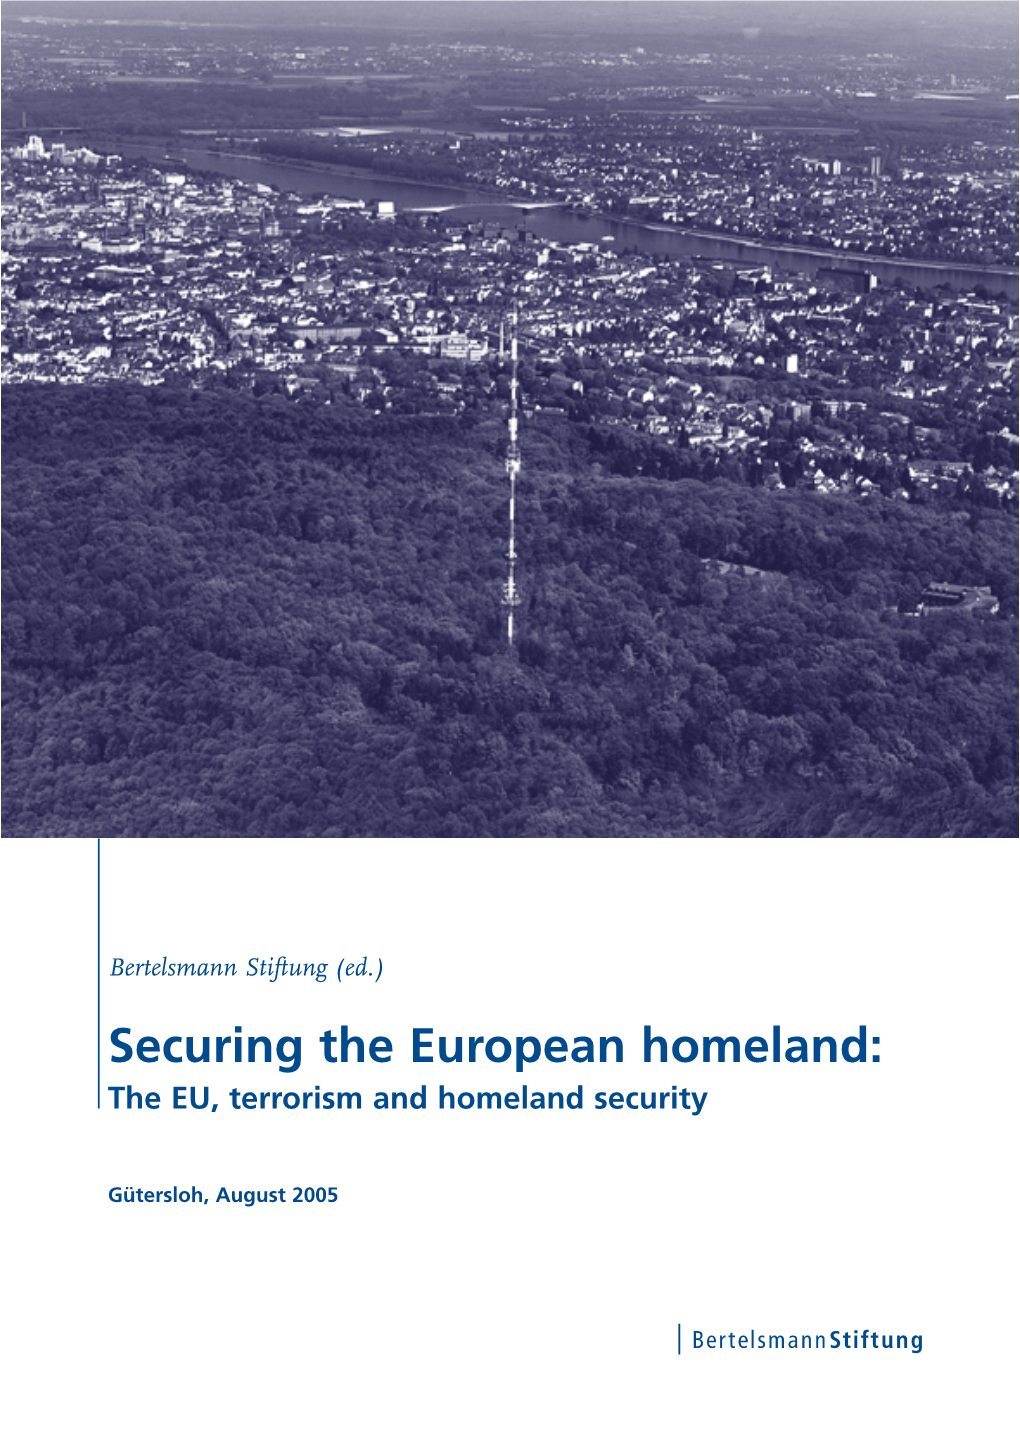 Securing the European Homeland: the EU, Terrorism and Homeland Security